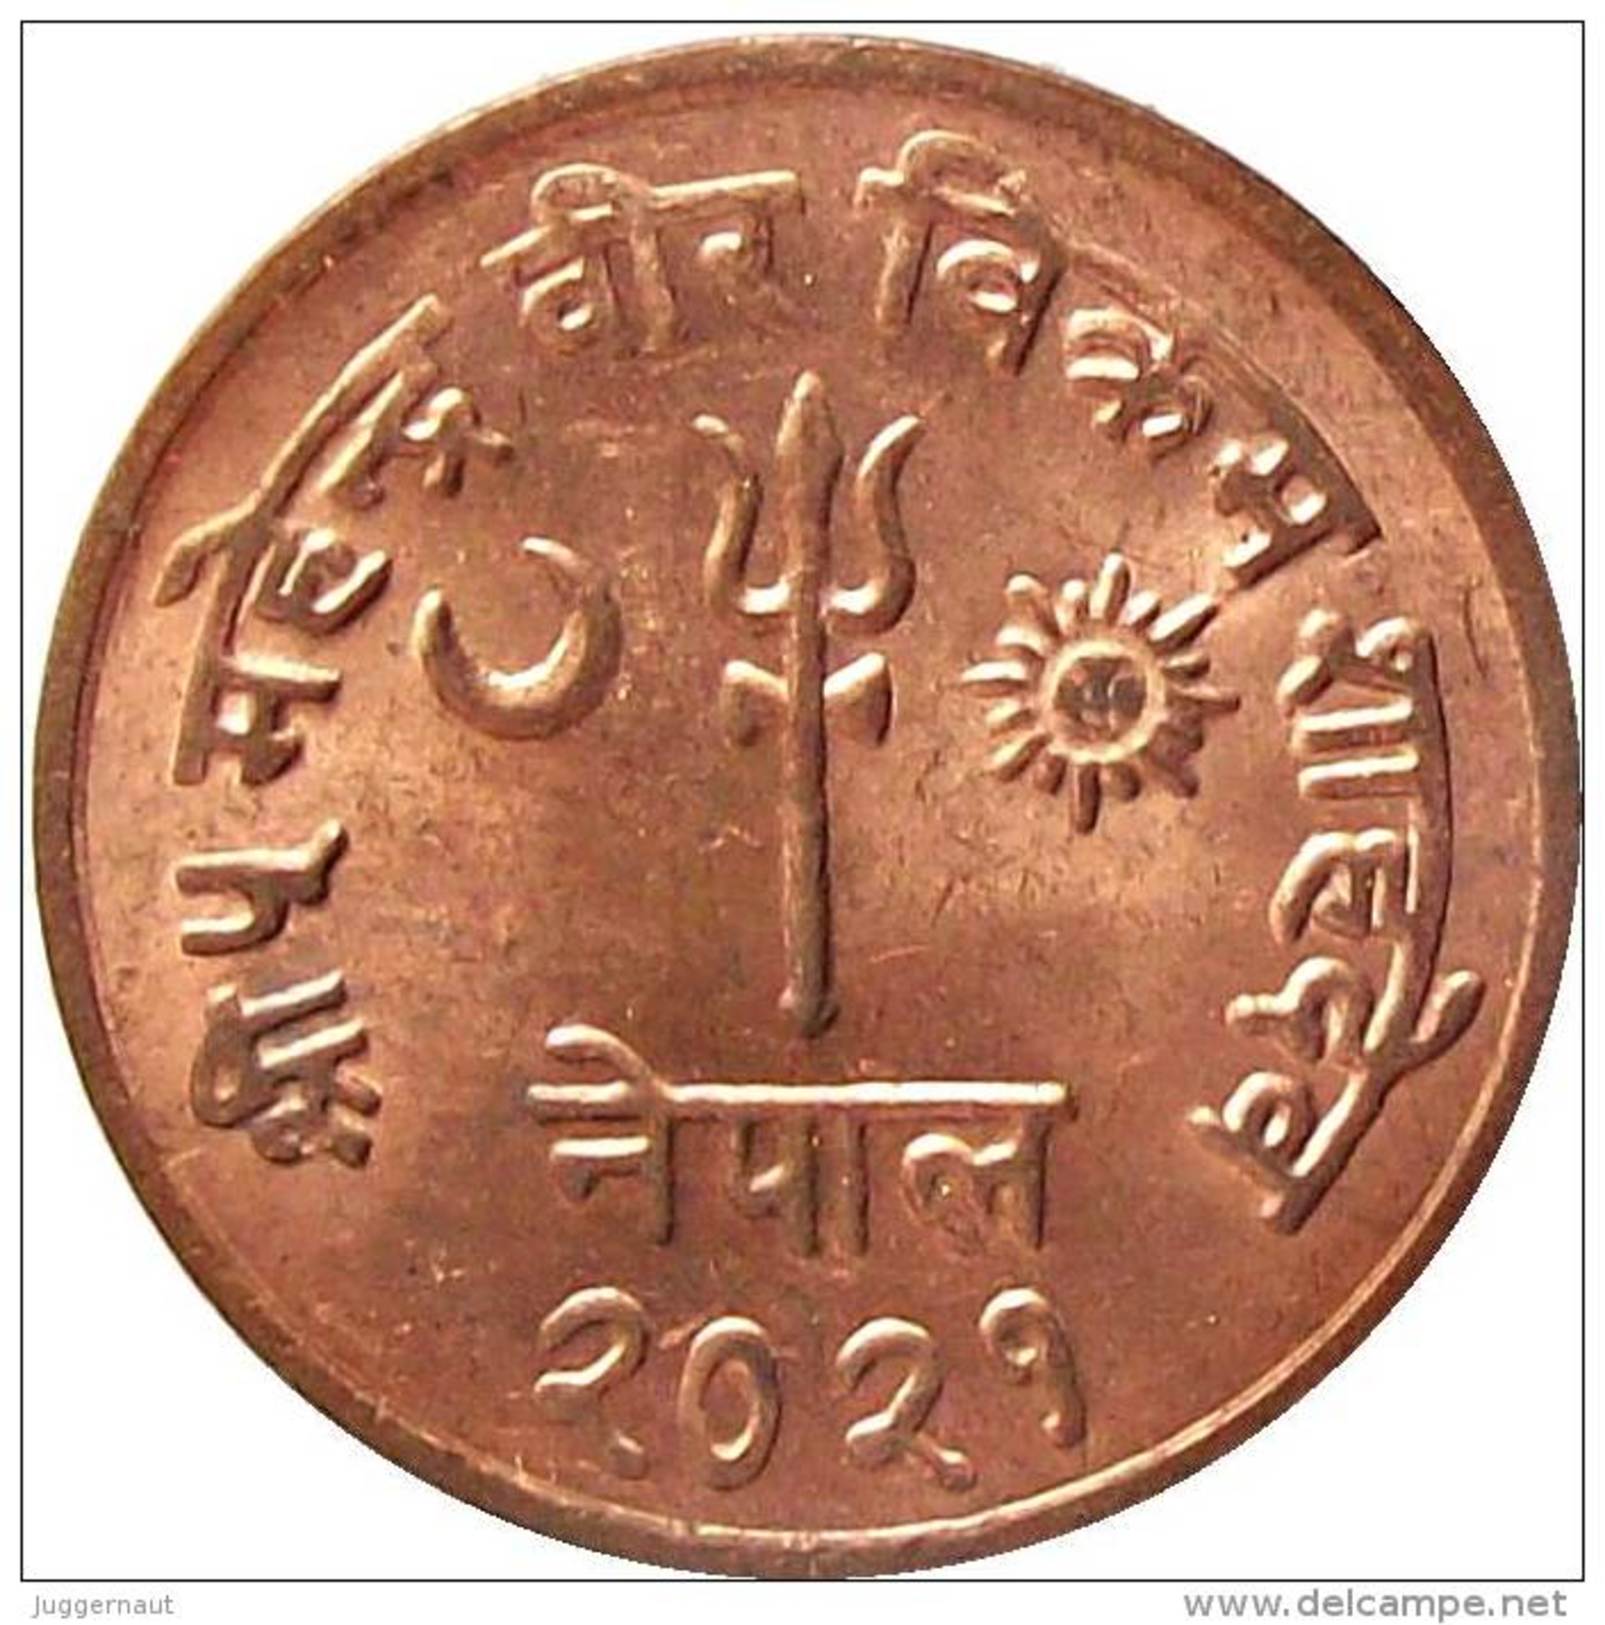 NEPAL 10 PAISA BRONZE COIN 1964 AD KM-764 UNCIRCULATED UNC - Nepal